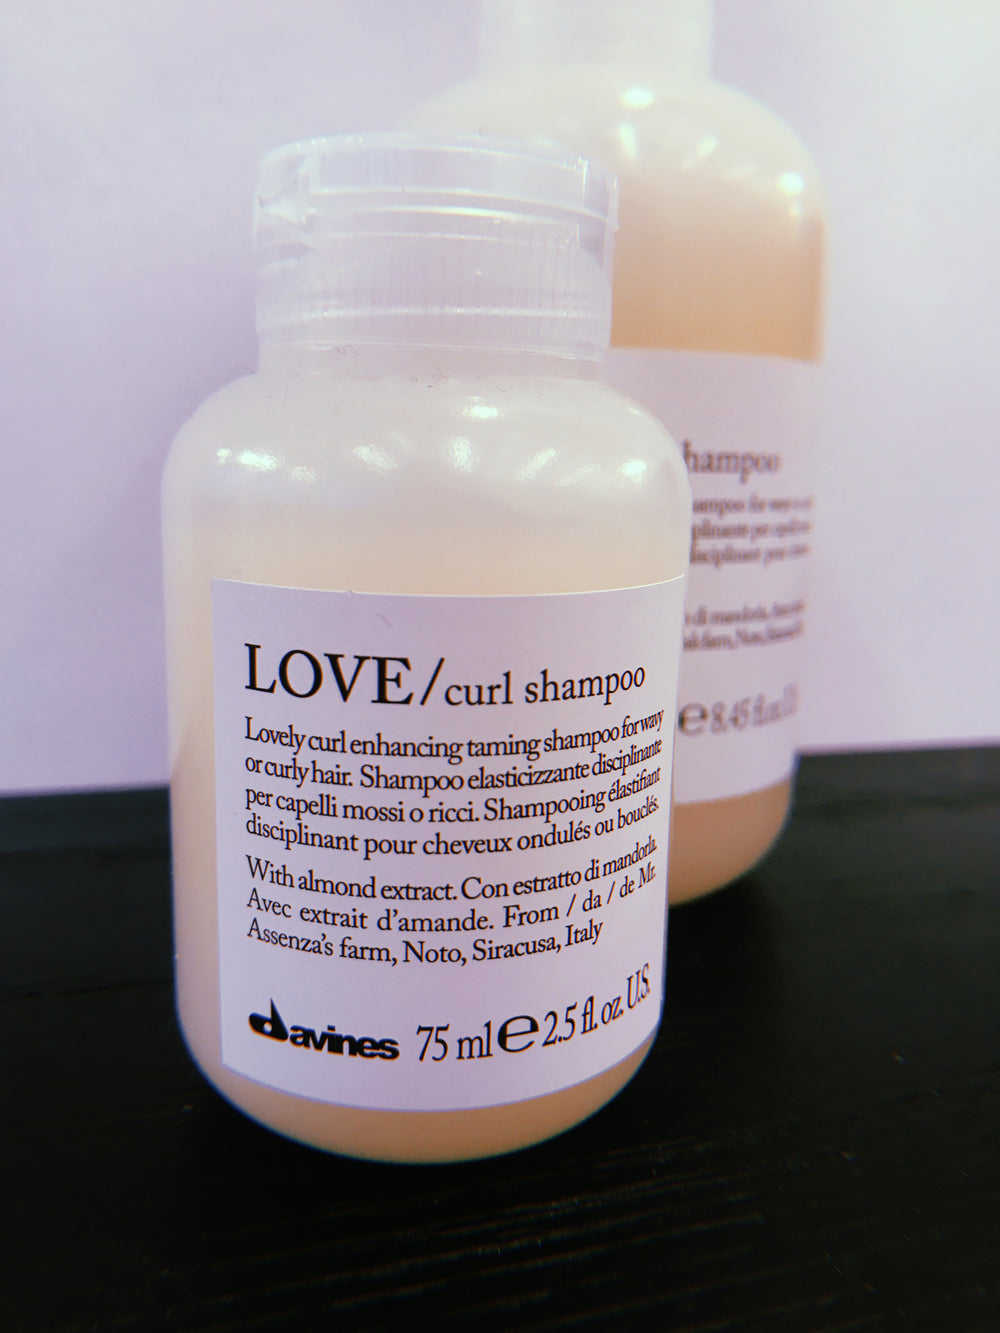 Twentyseven Toronto - Love Curl Shampoo - Travel Size (75ml)